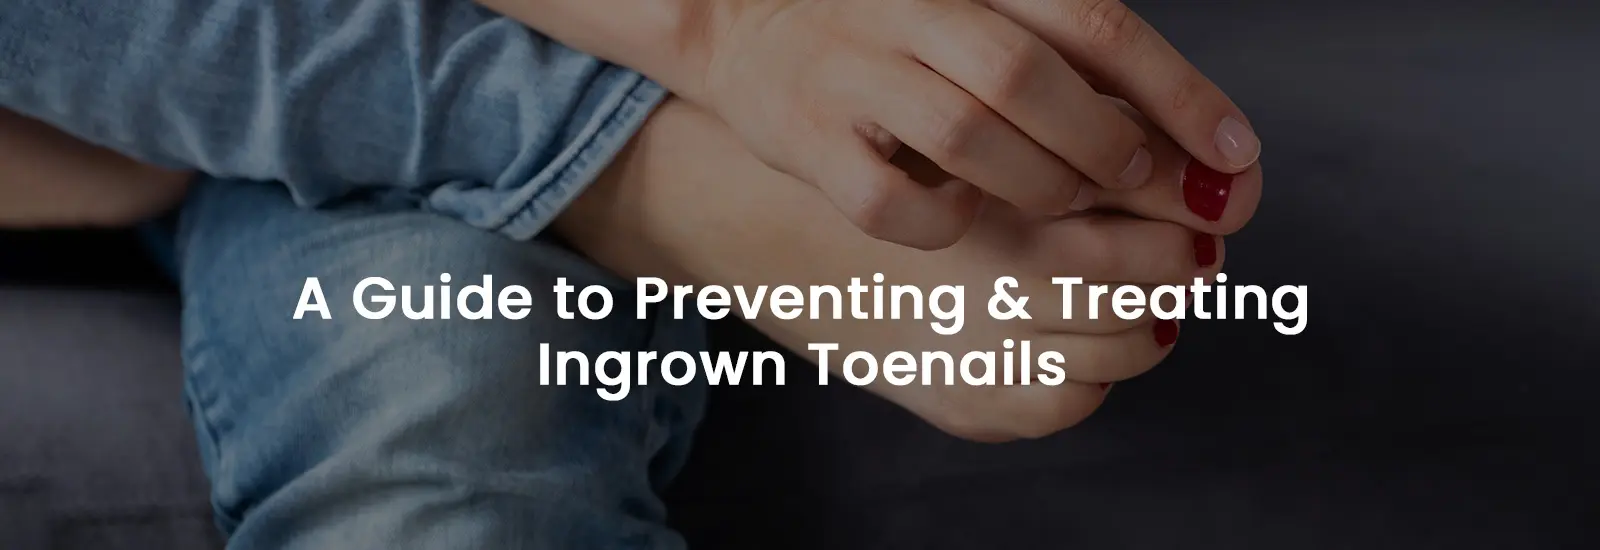 Ingrown Toenail, How to Prevent & Treat It